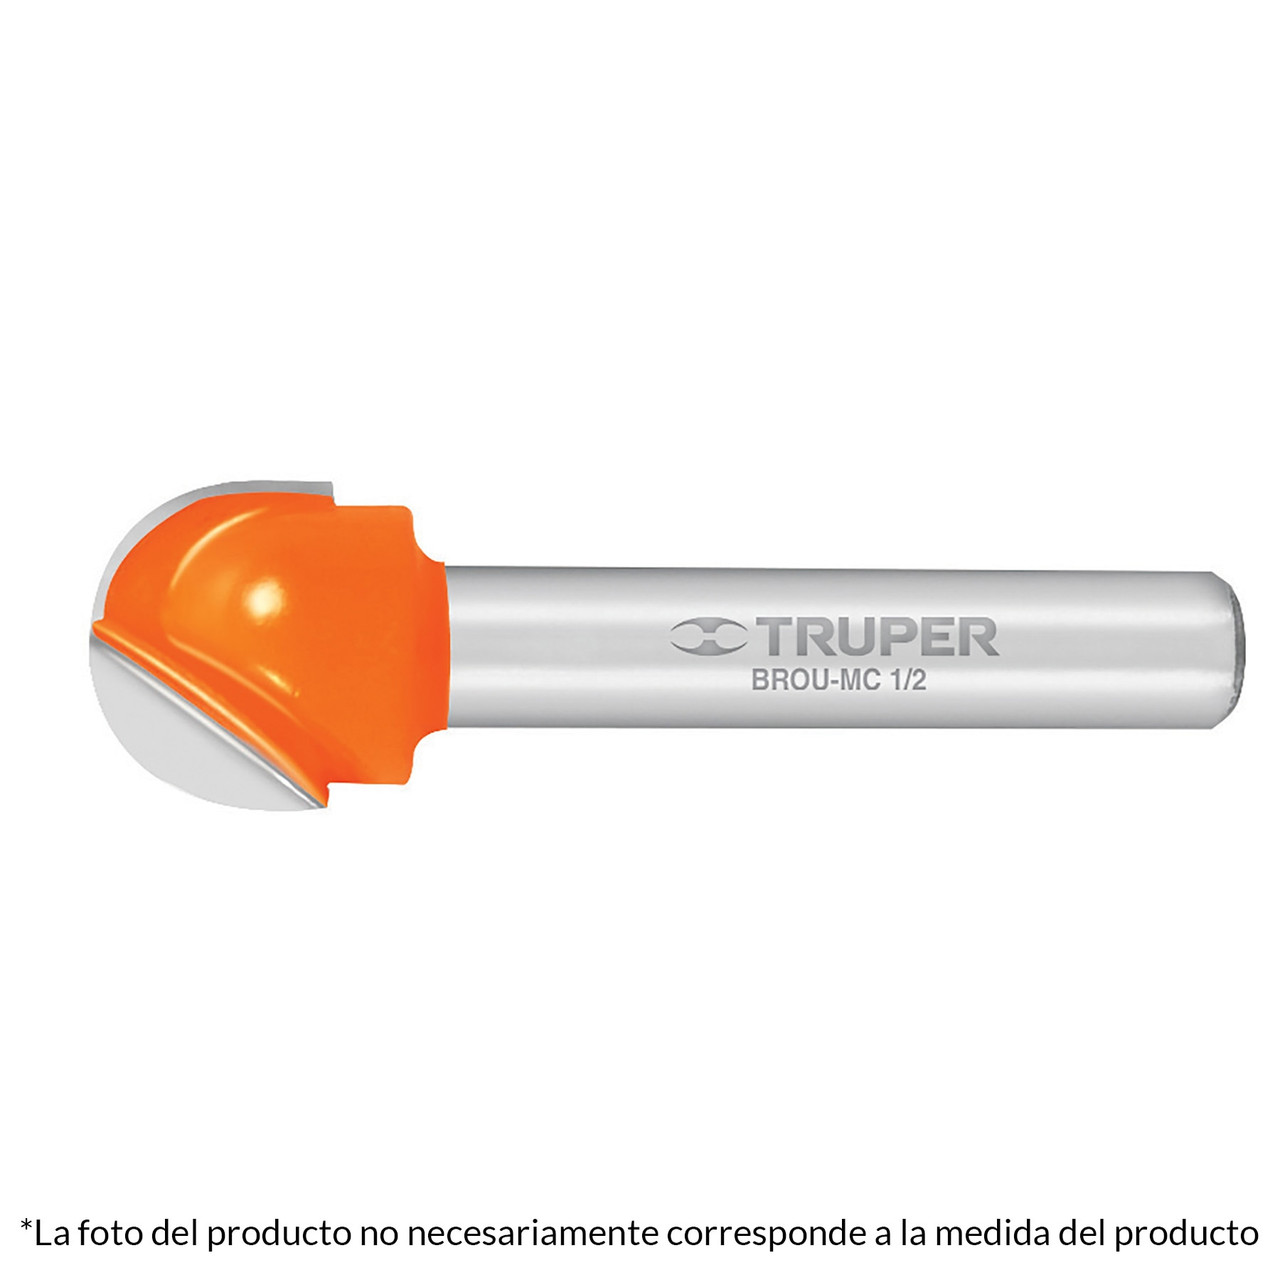 Truper 3/8" Core Box Router Bit #11461-2 Pack